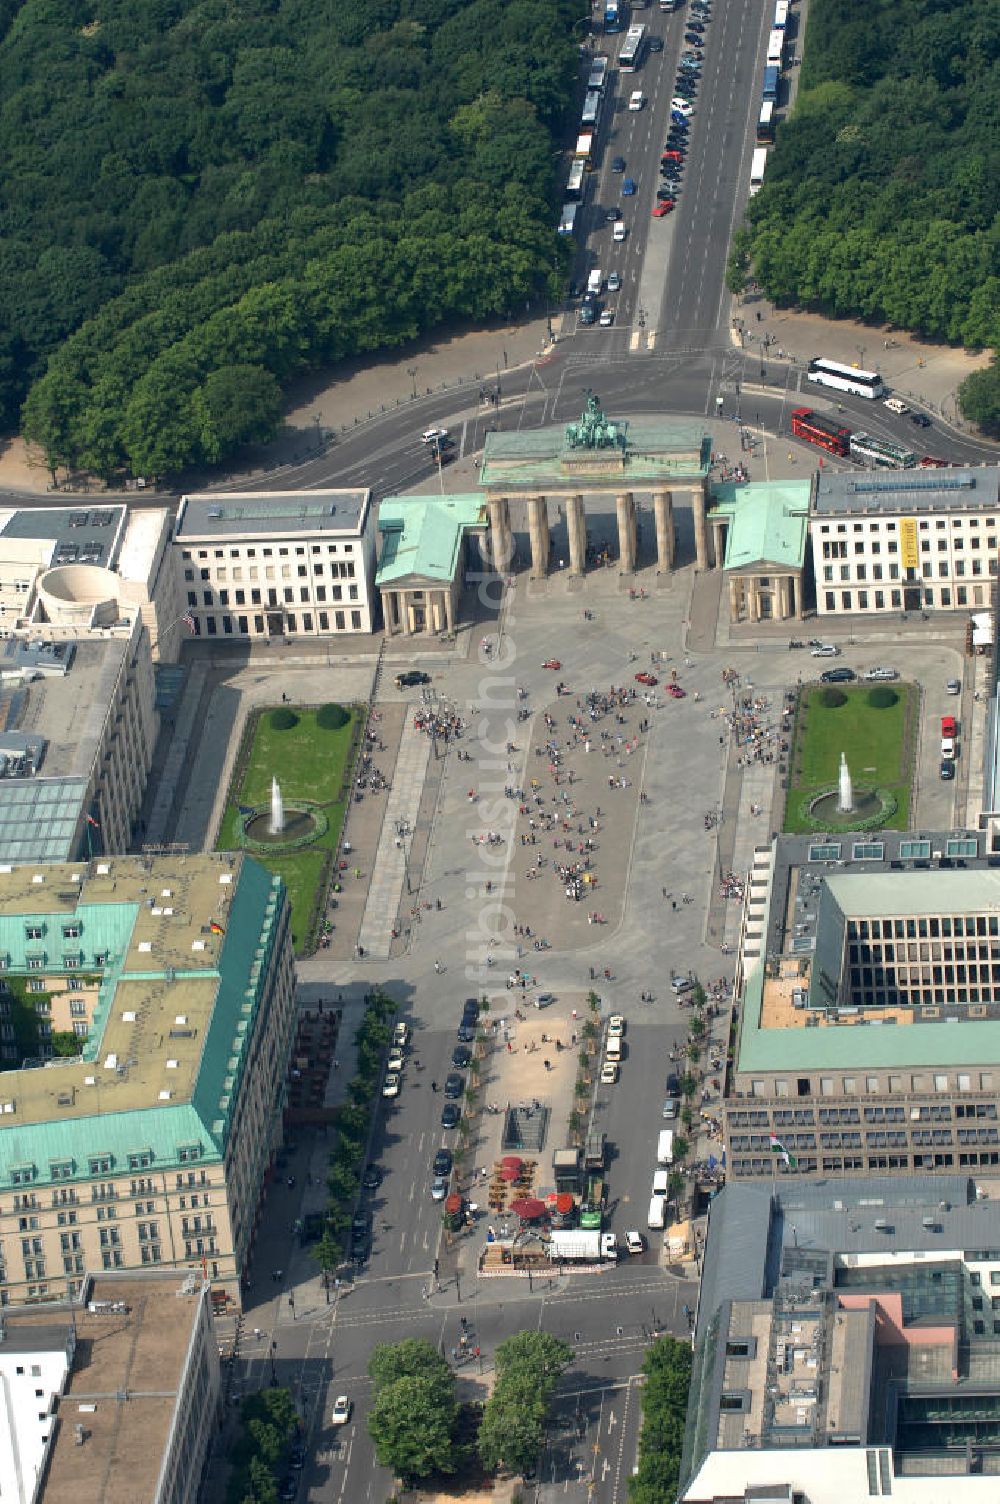 Luftaufnahme Berlin - Pariser Platz am Brandenburger Tor in Berlin